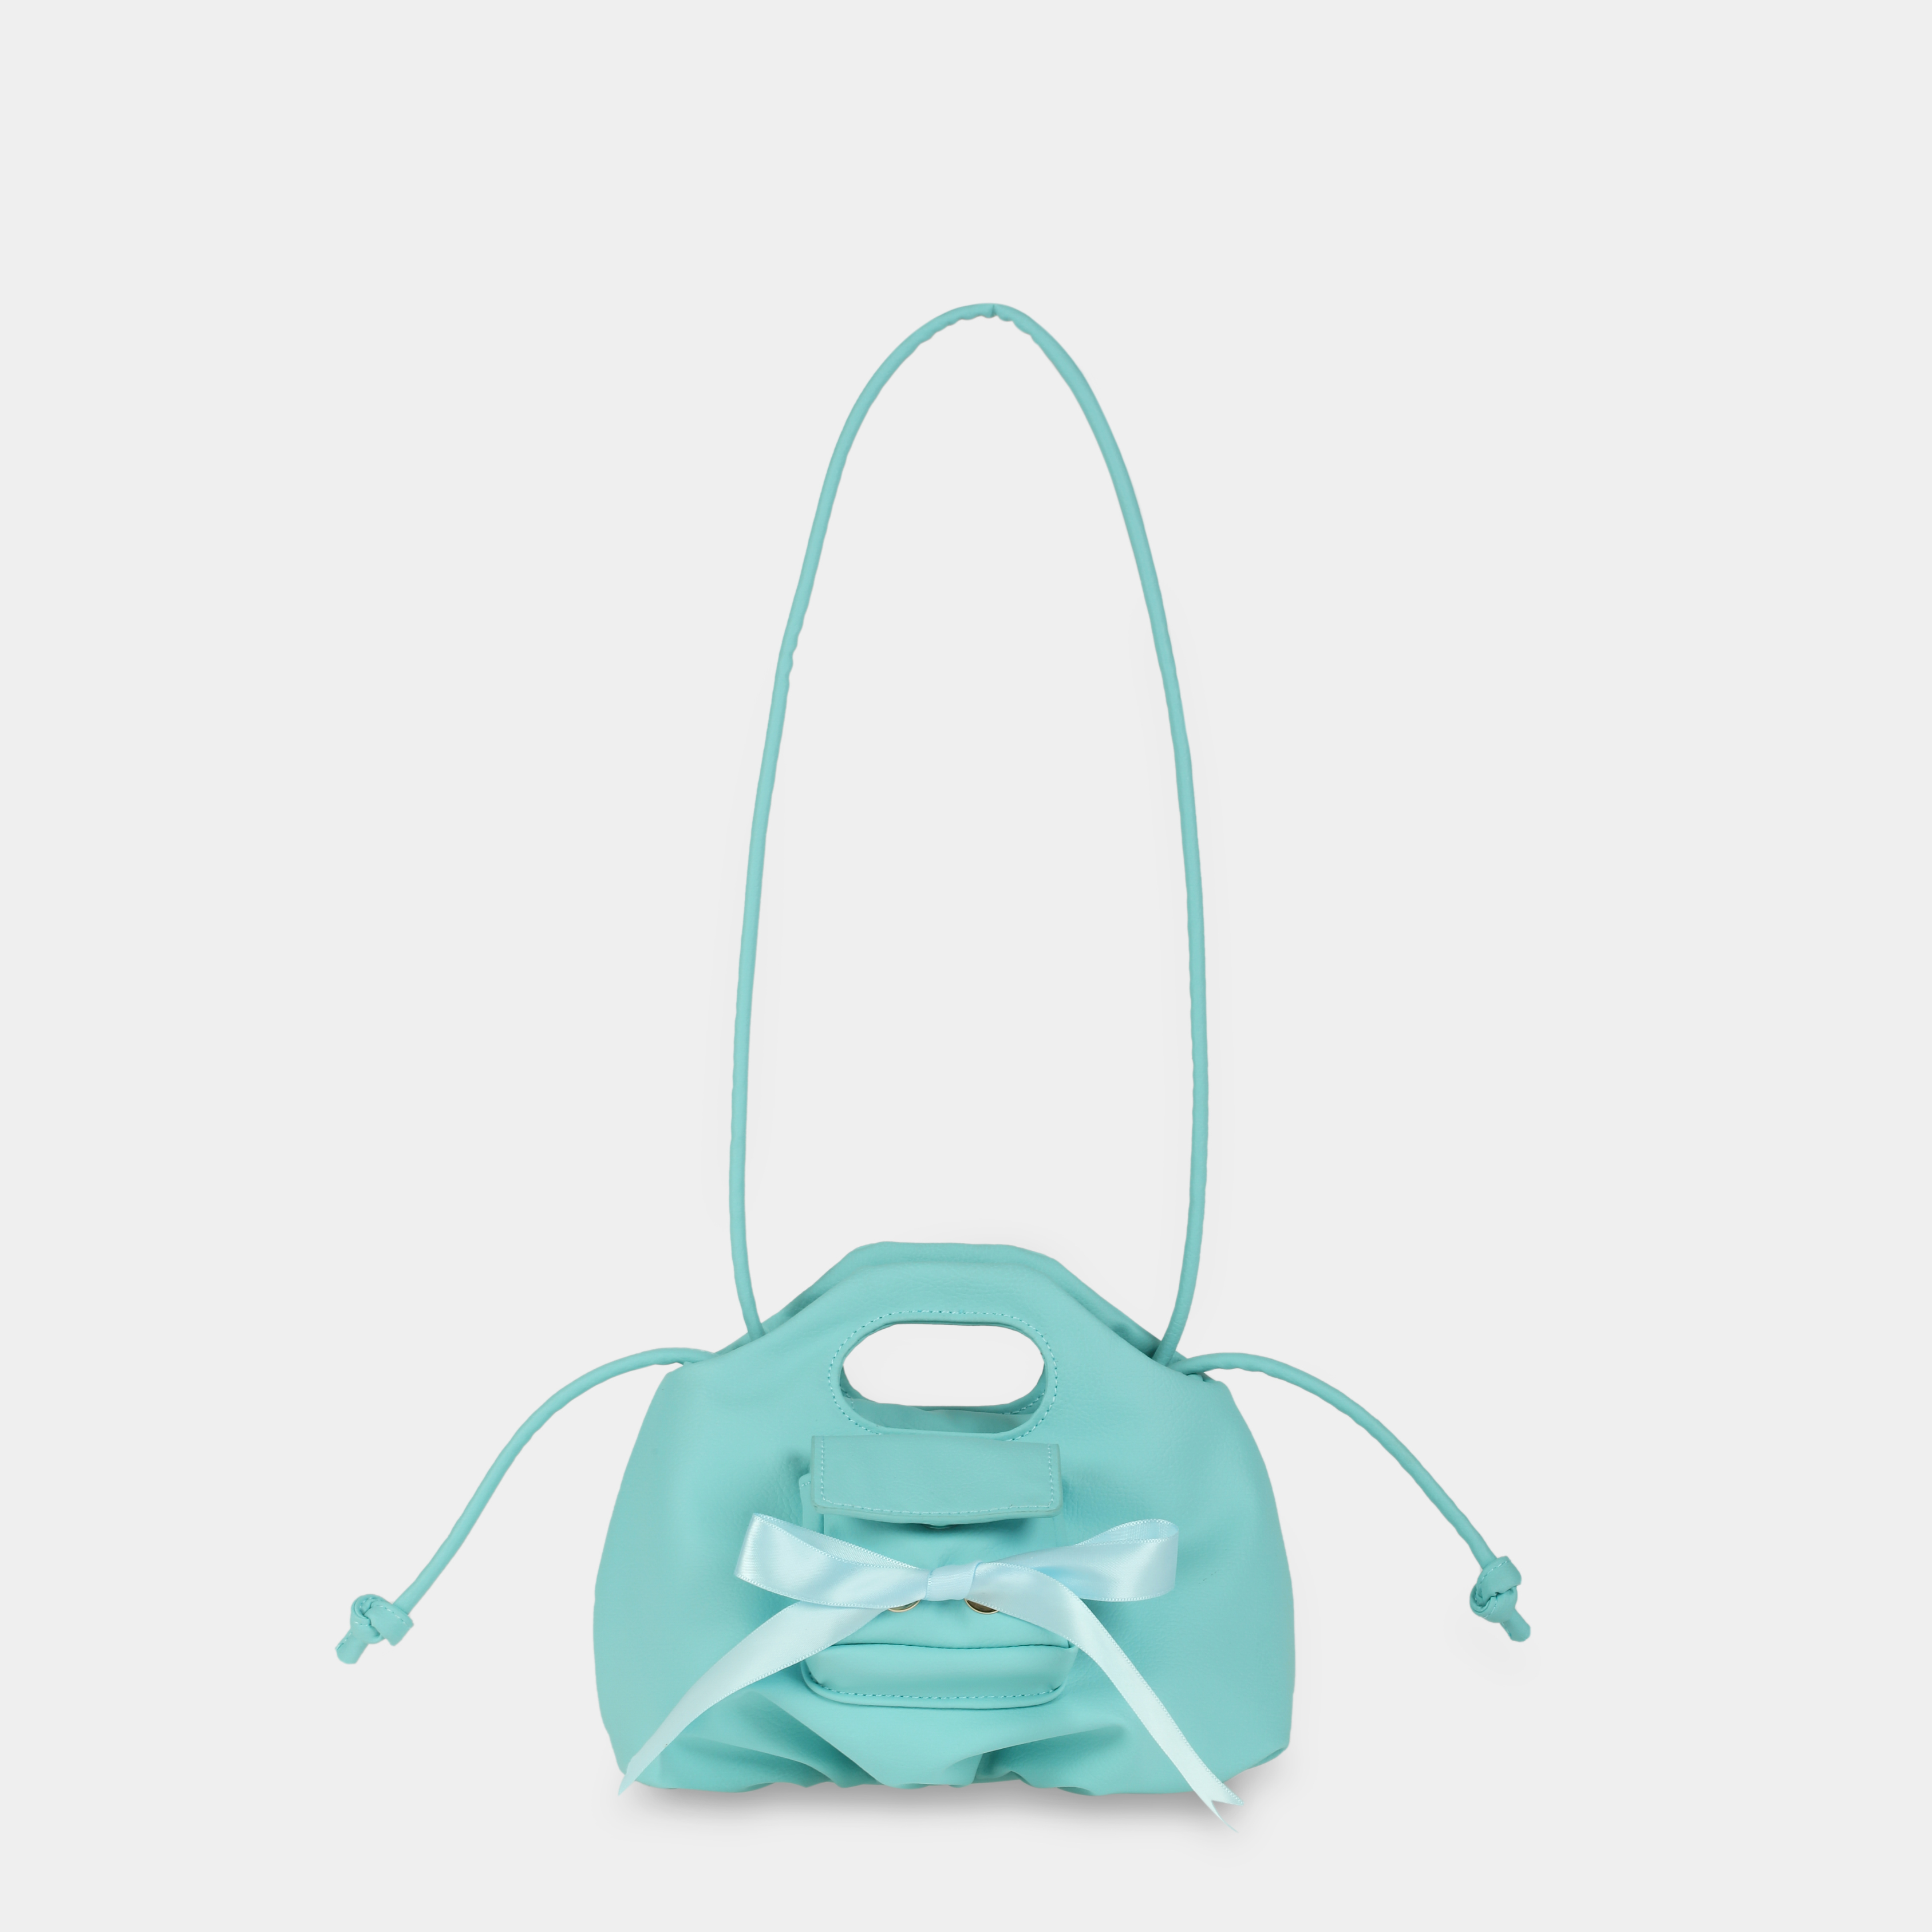 Flower Mini Mini Pocket & Bow handbag in blue pastel